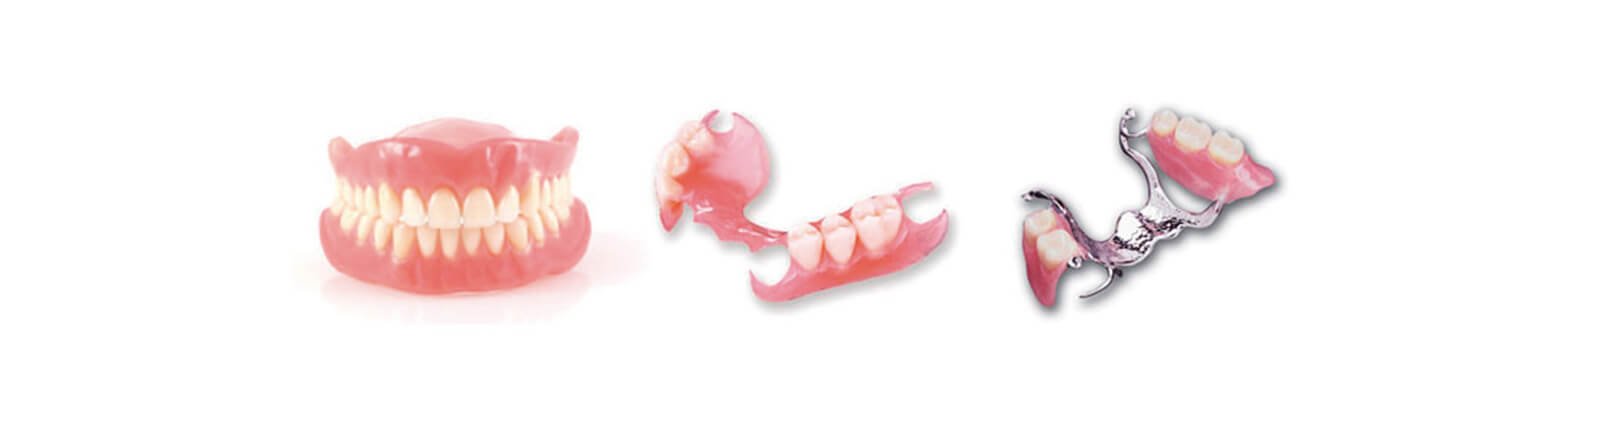 Prótesis Dental Removible | Santa Perpetua Clinica Dental